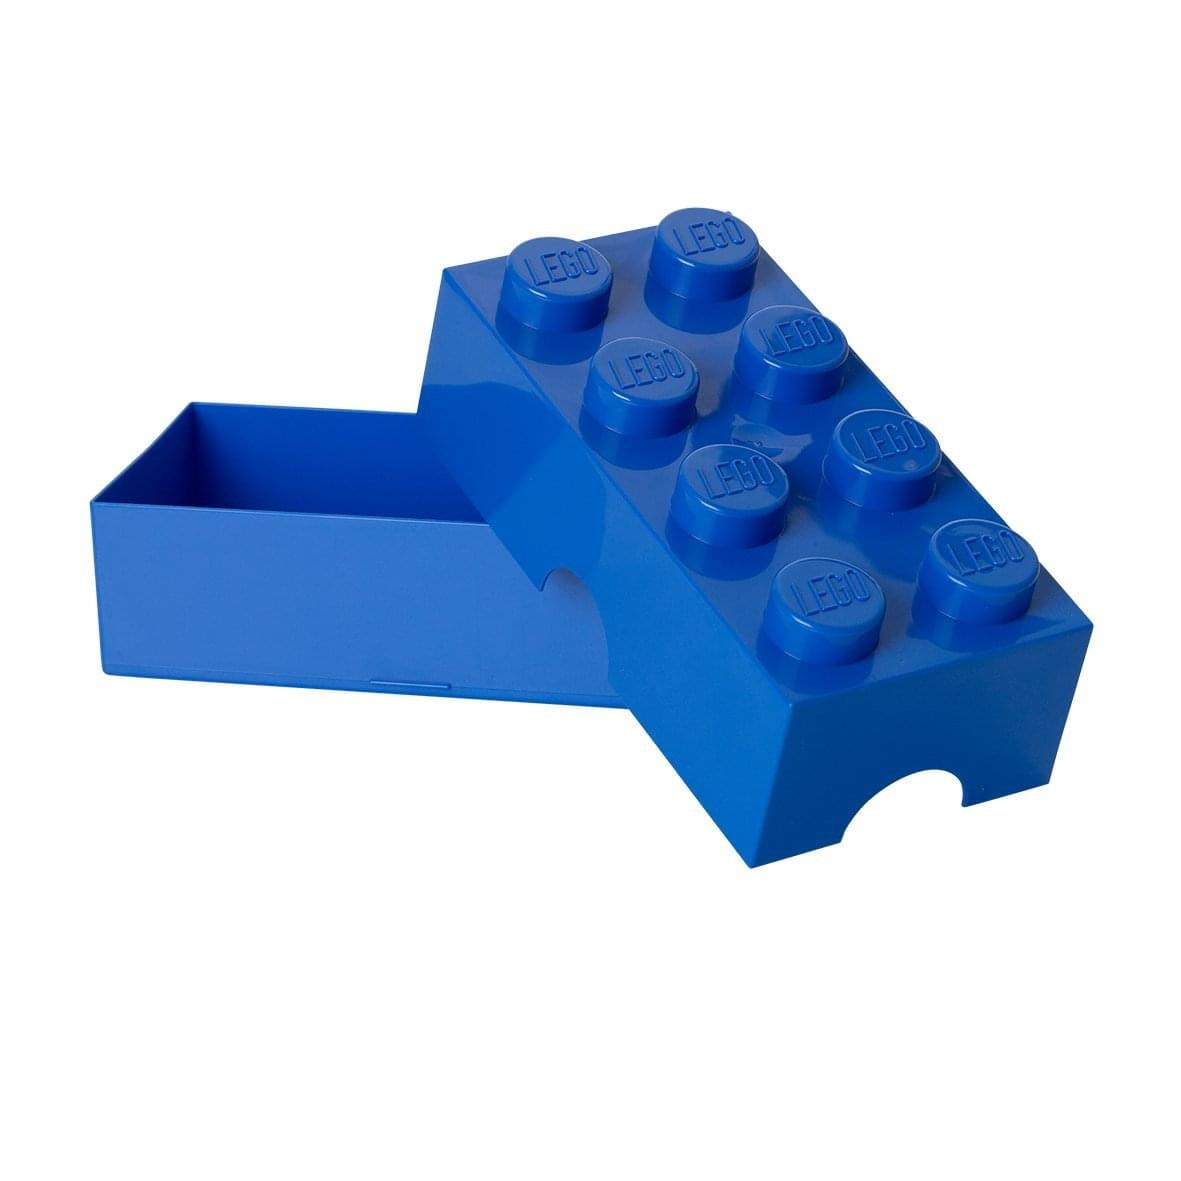 LEGO lunch box- brick print